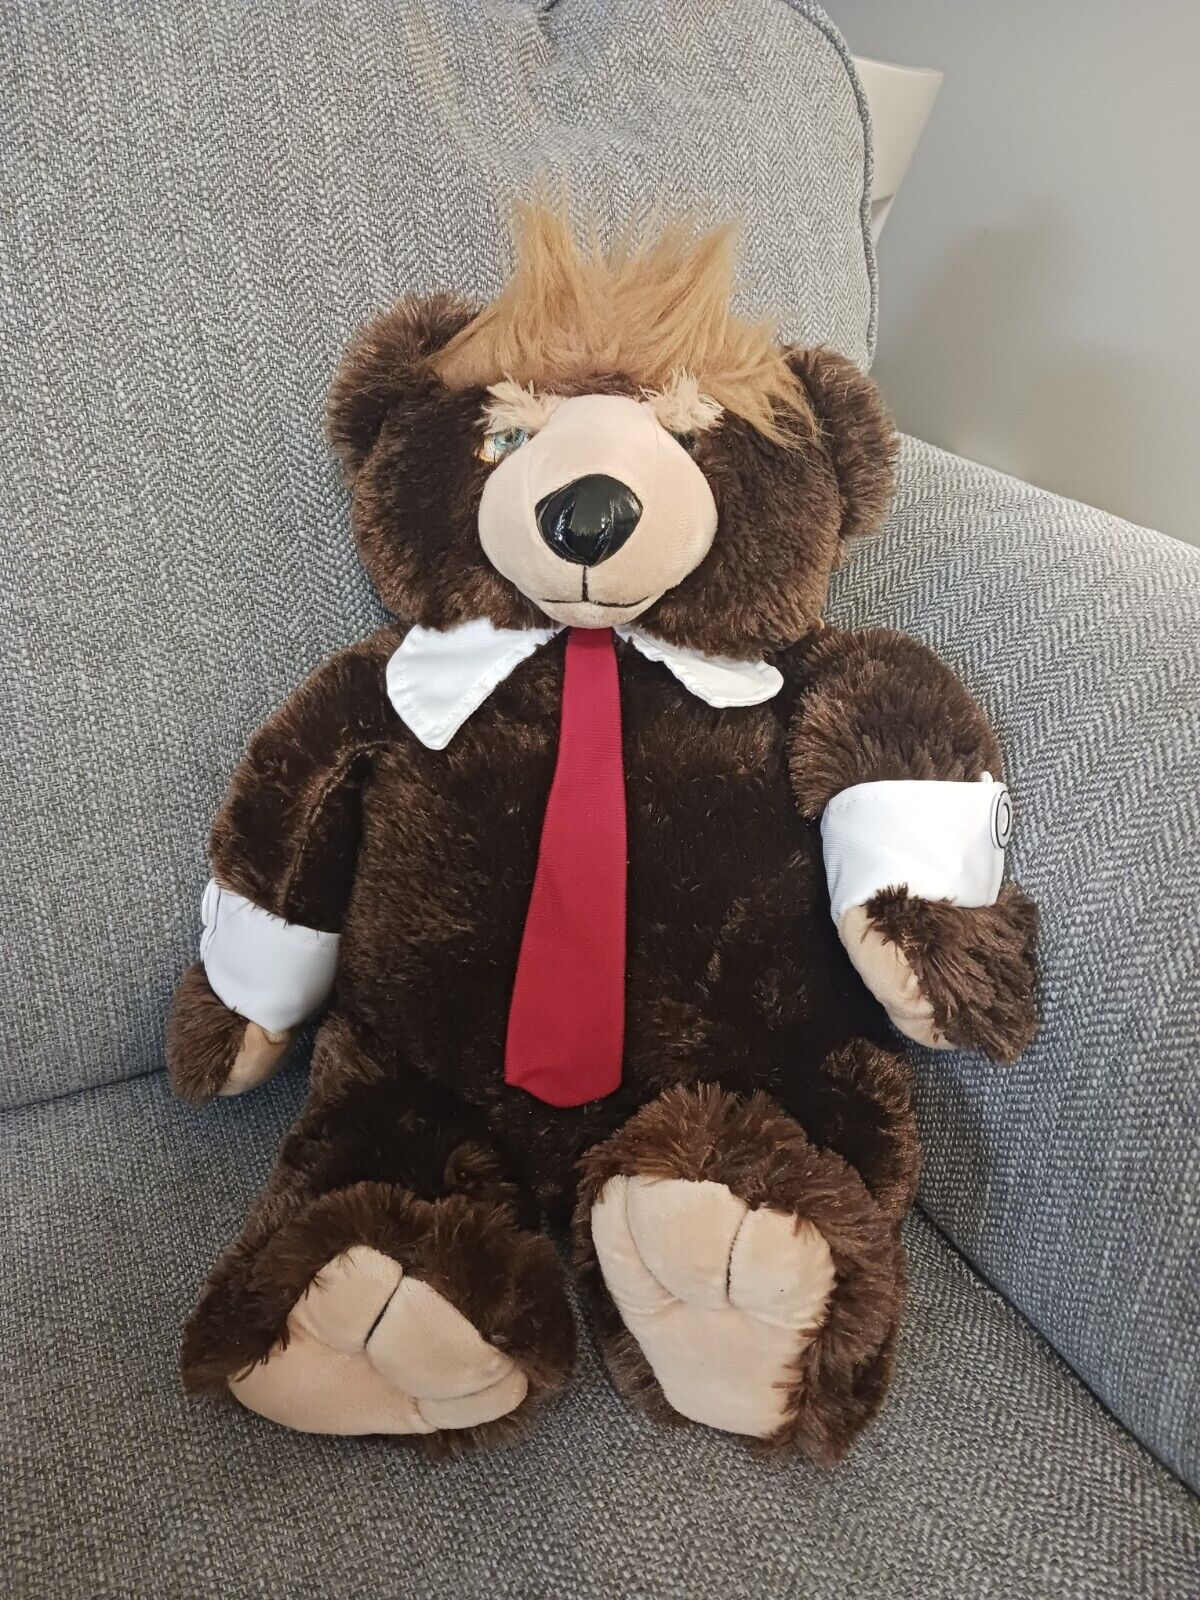 TRUMPY BEAR  22” Donald Trump Teddy Bear Plush w/ American Flag Cape MAGA 